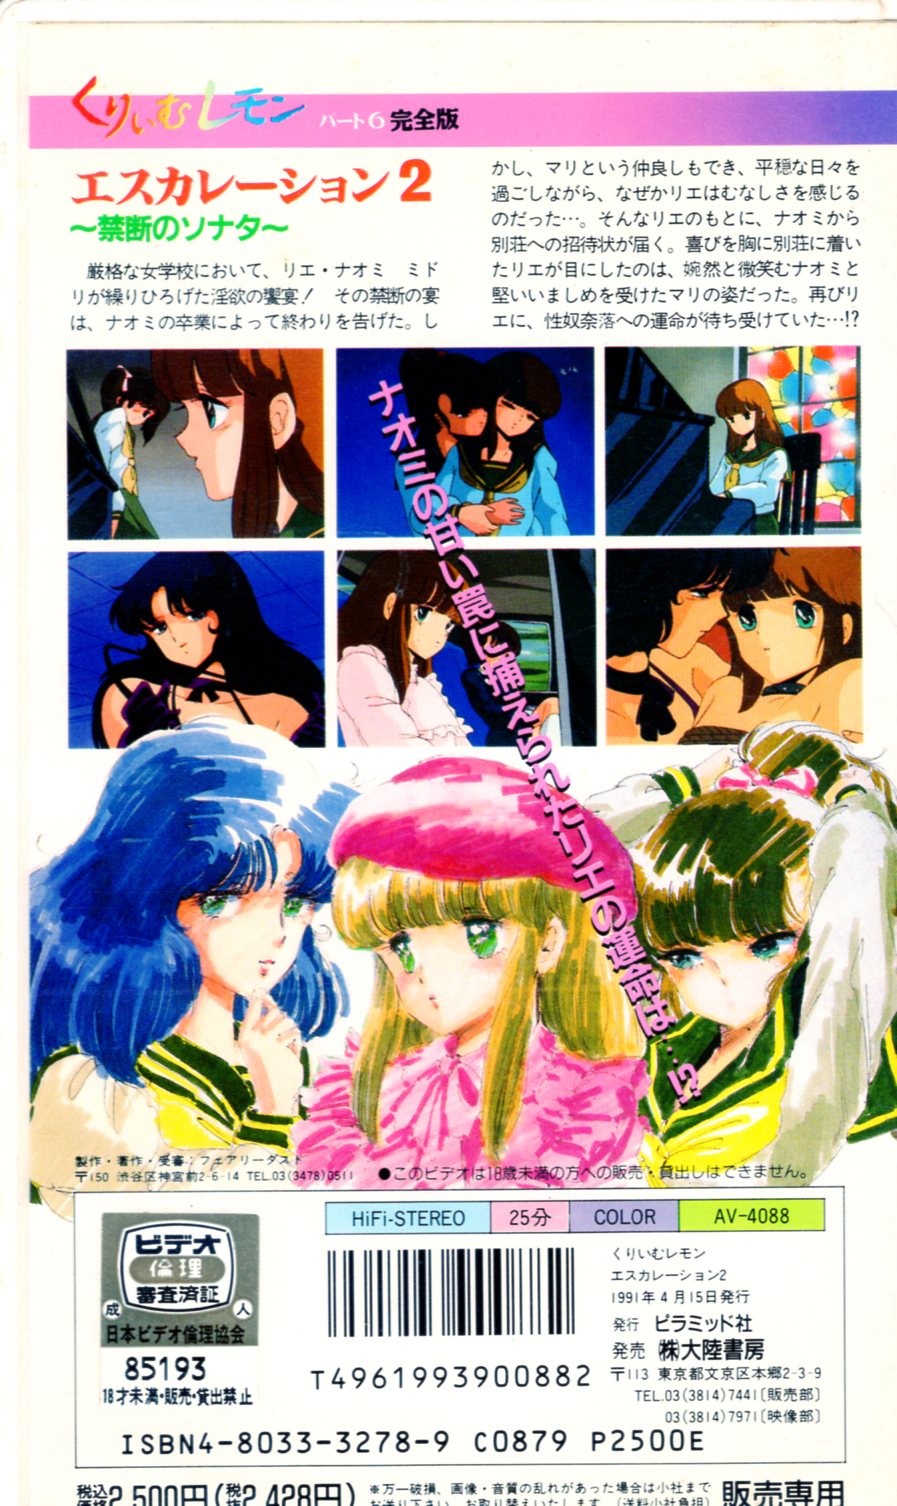 Tairiku Shobou Adult VHS Cream Lemon Part 6 Complete Edition